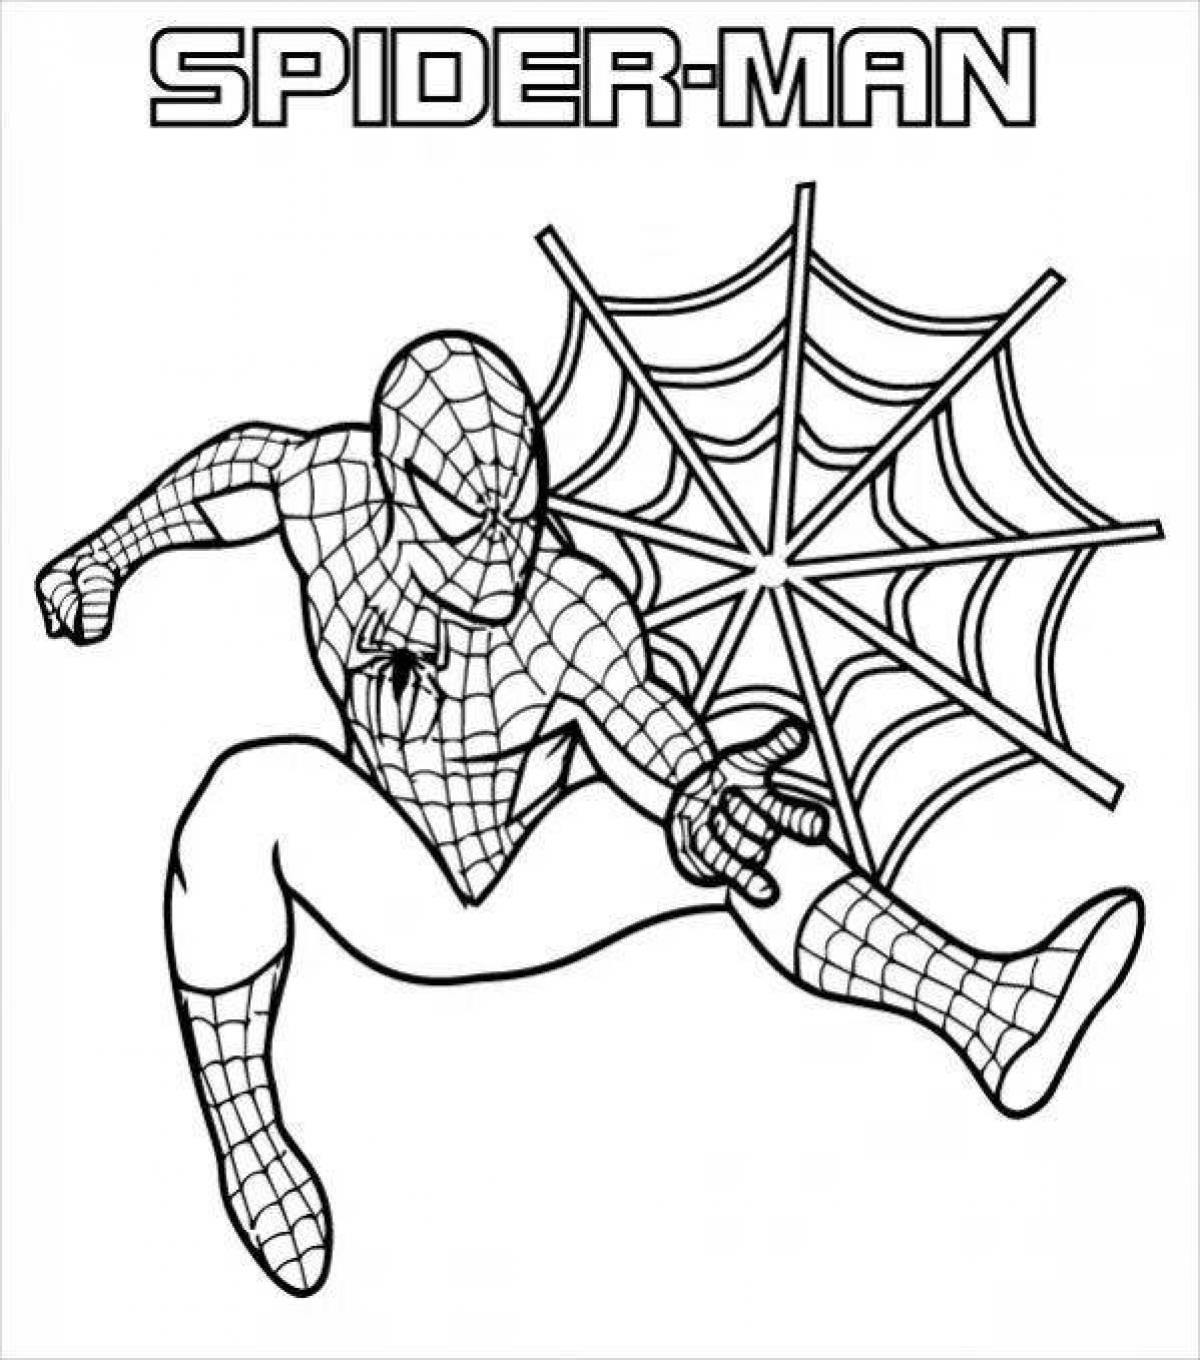 Amazing drawing of Spiderman